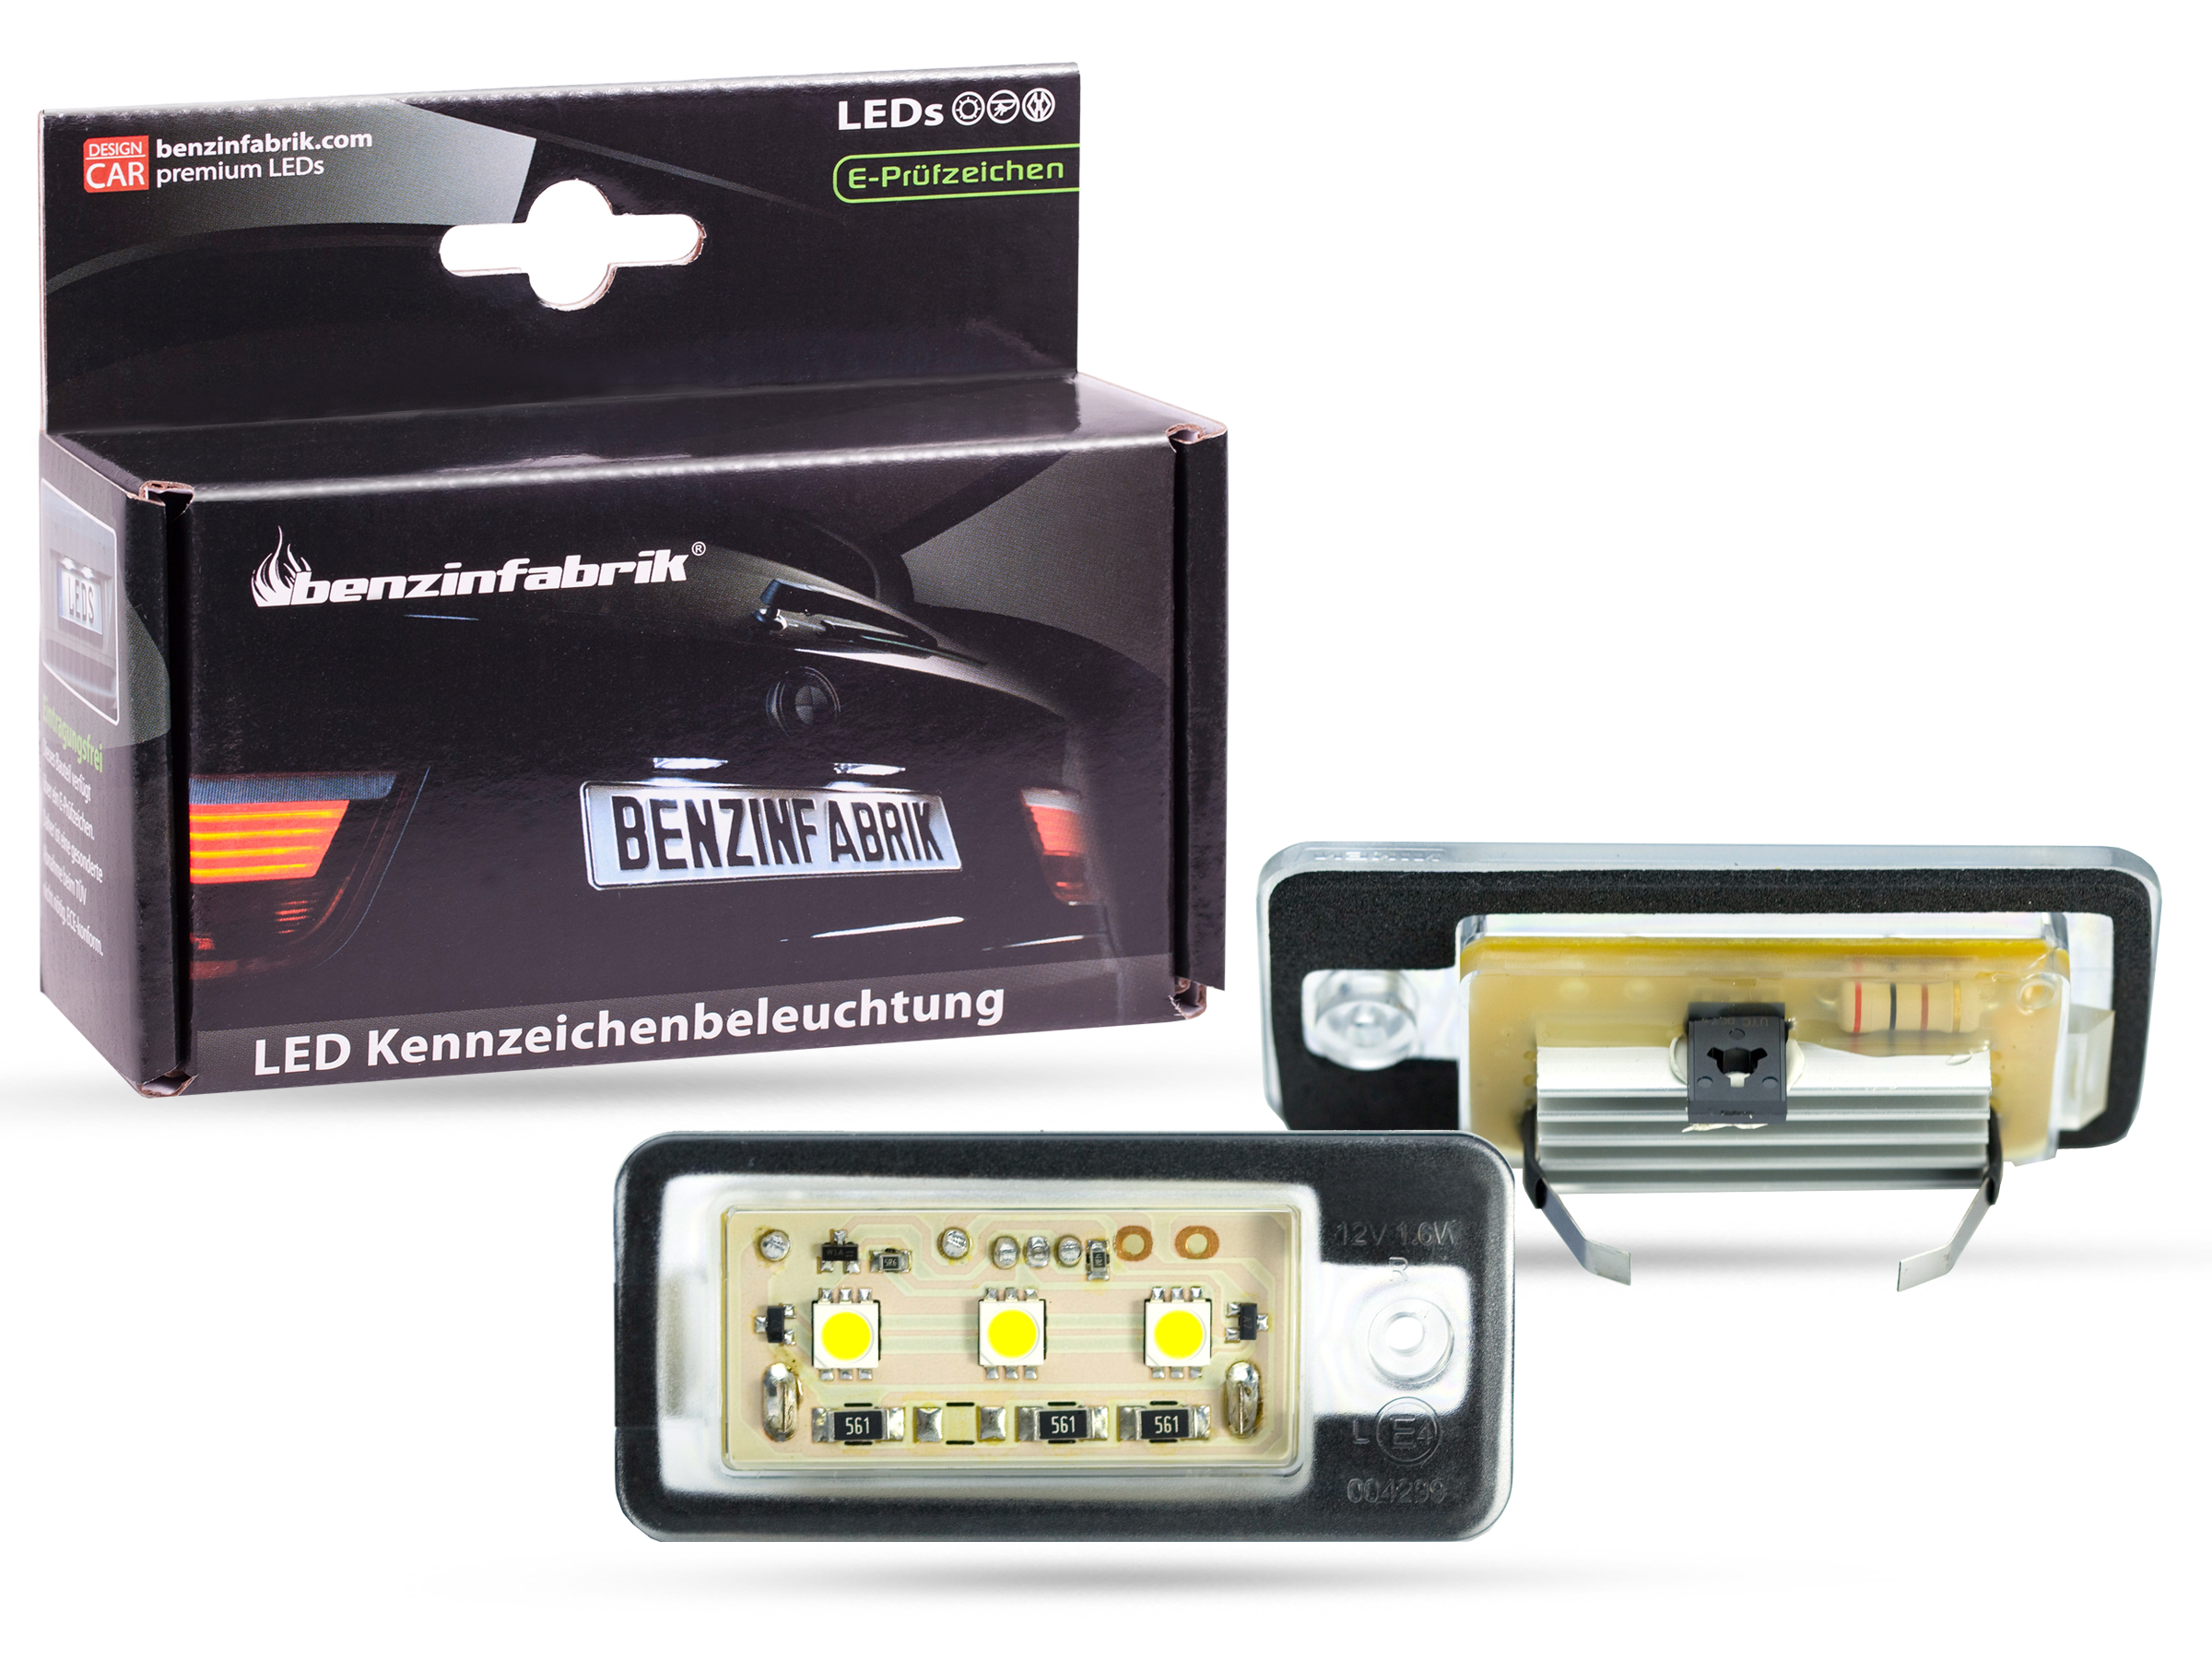 LED Kennzeichenbeleuchtung Module Audi A3, A3 Sportsback, S3, 8P